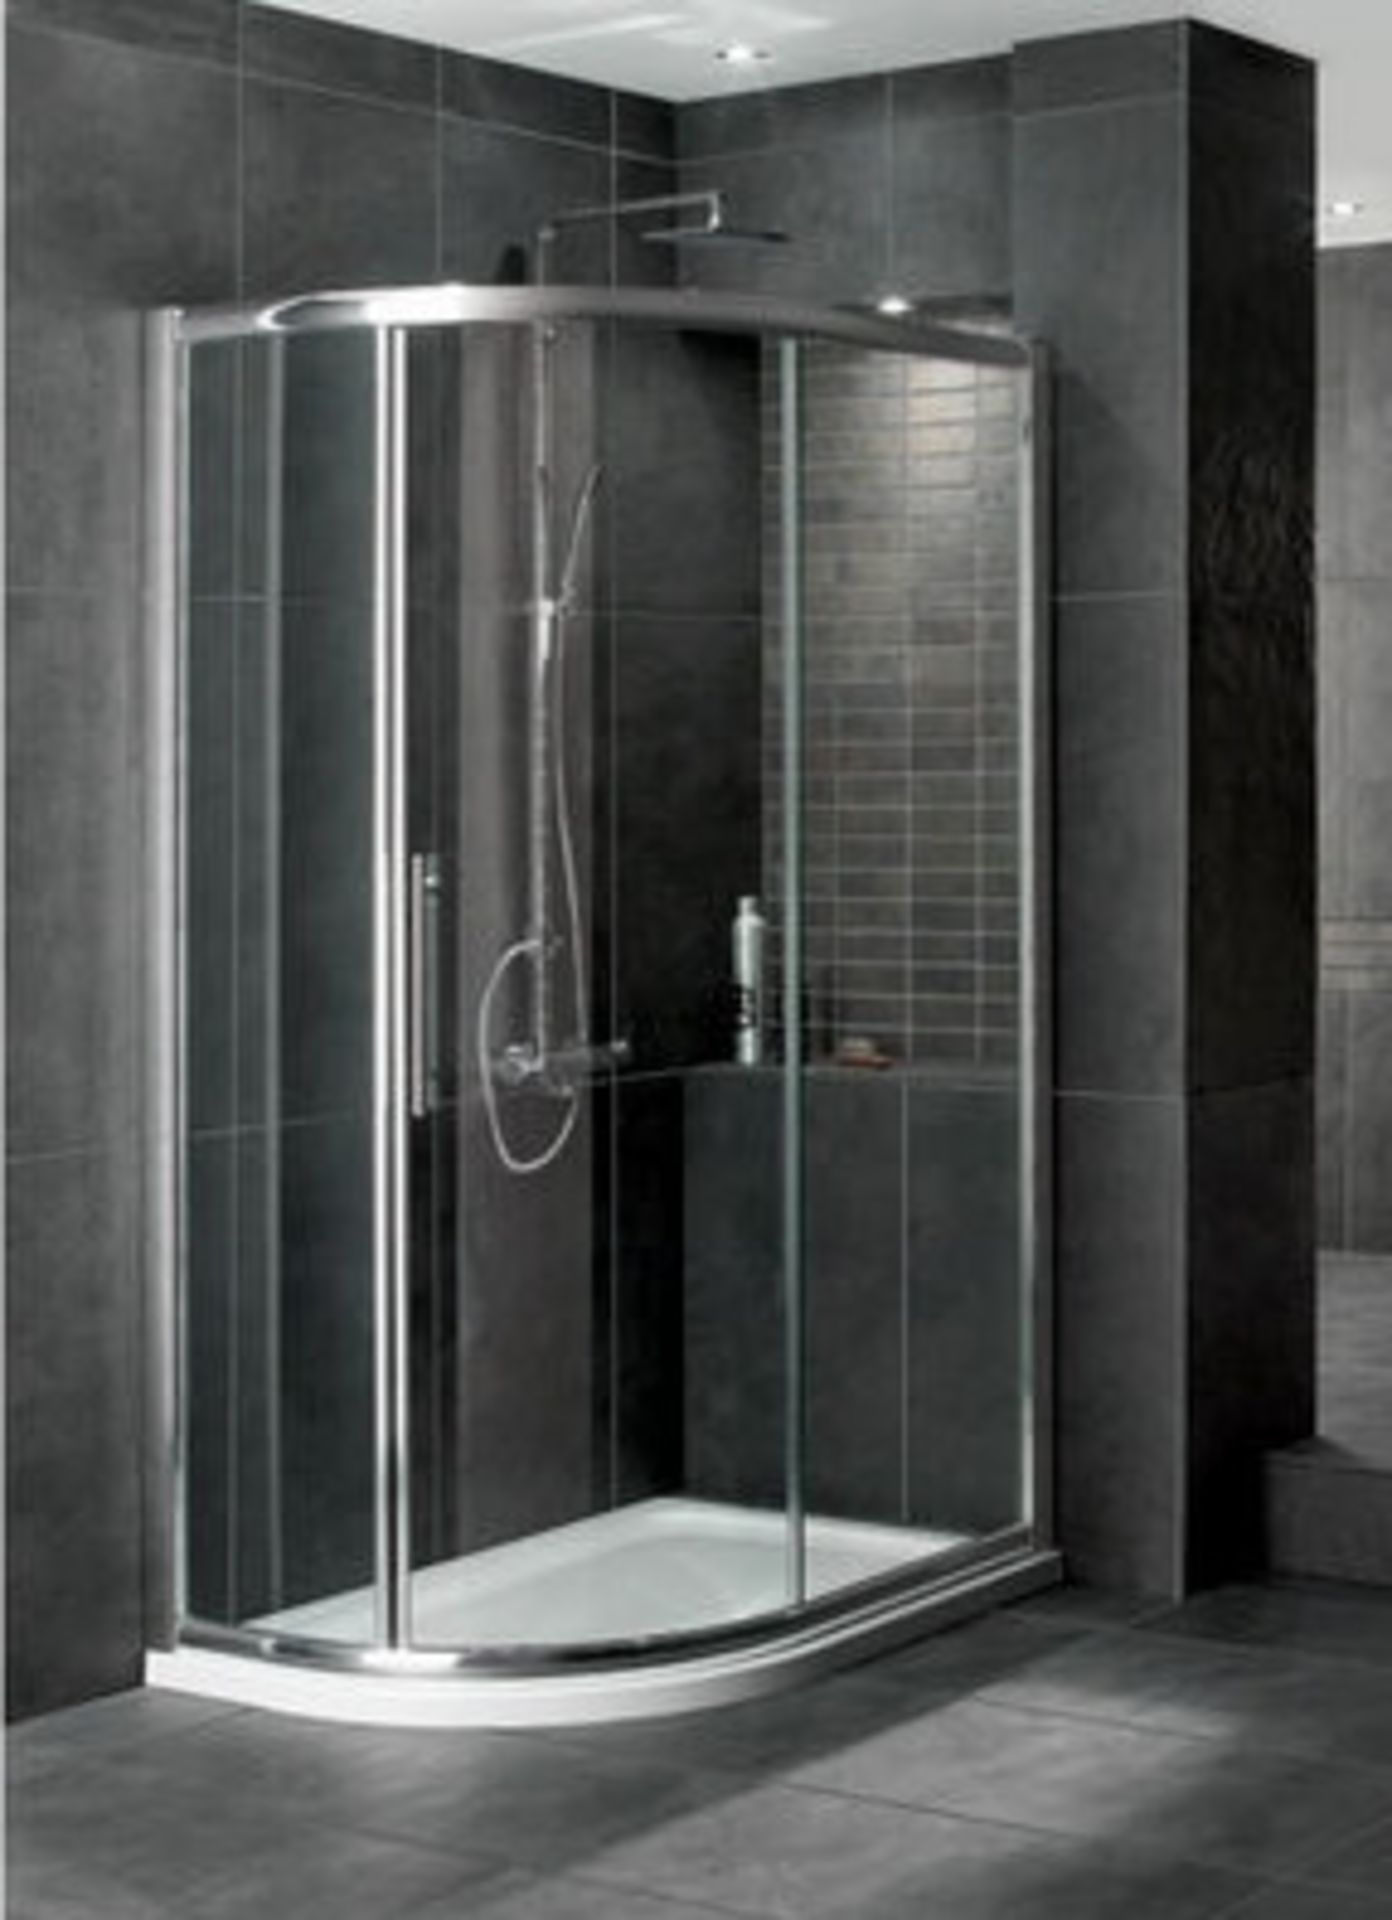 1 x Vogue Bathrooms SULIS Offset Quadrant 1200x900mm Shower Enclosure - Polished Chrome Finish - 6mm